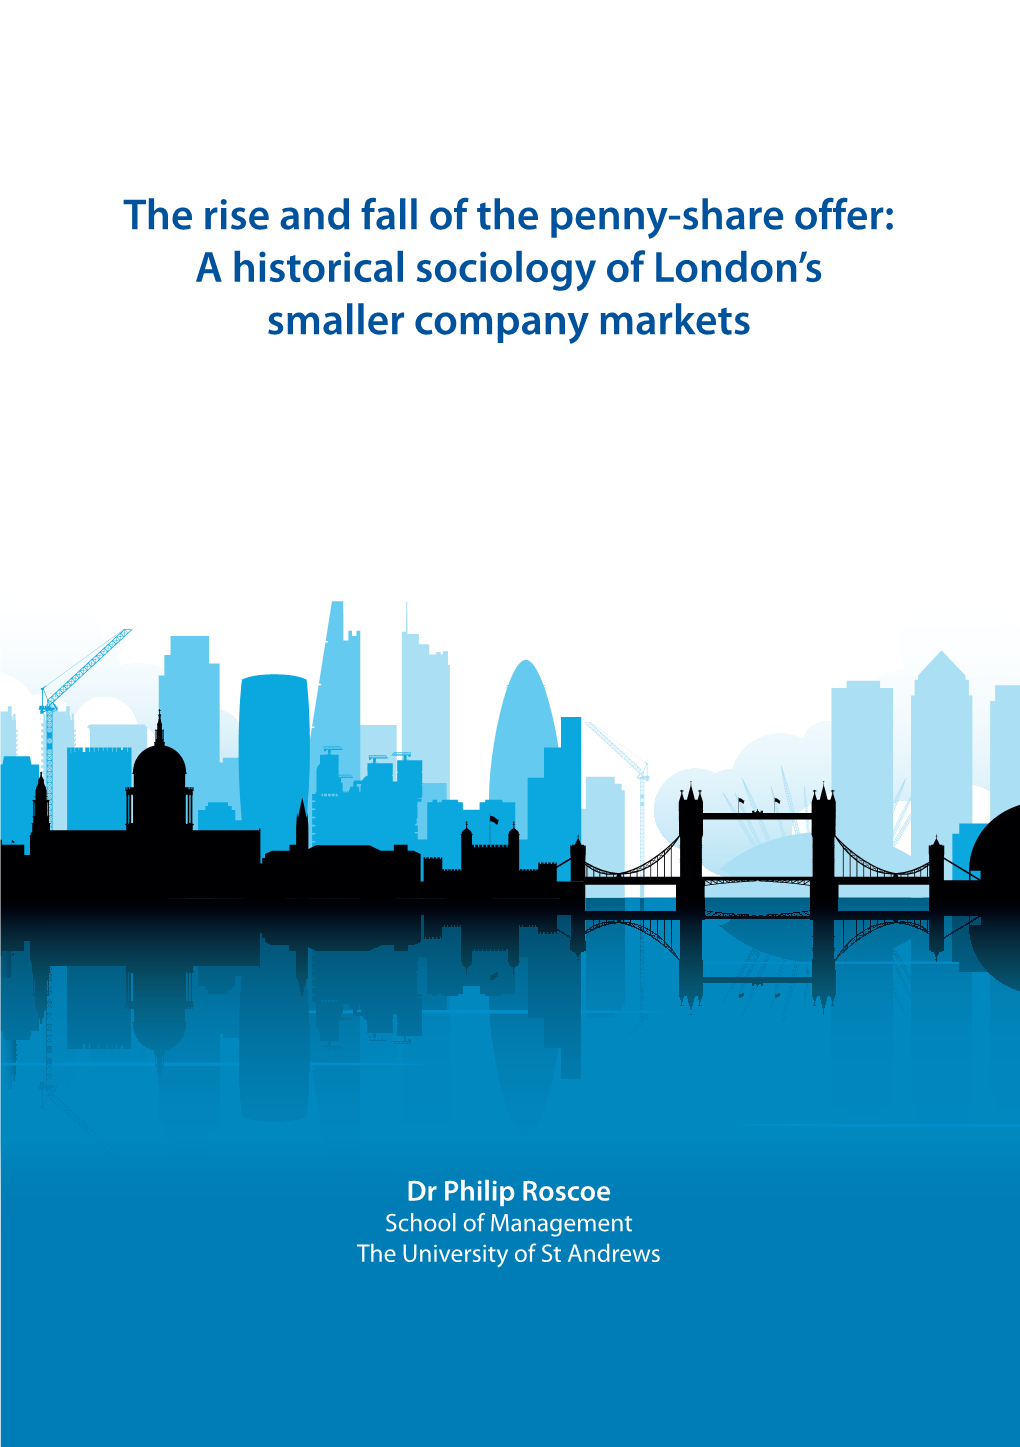 A Historical Sociology of London's Smaller Company Markets